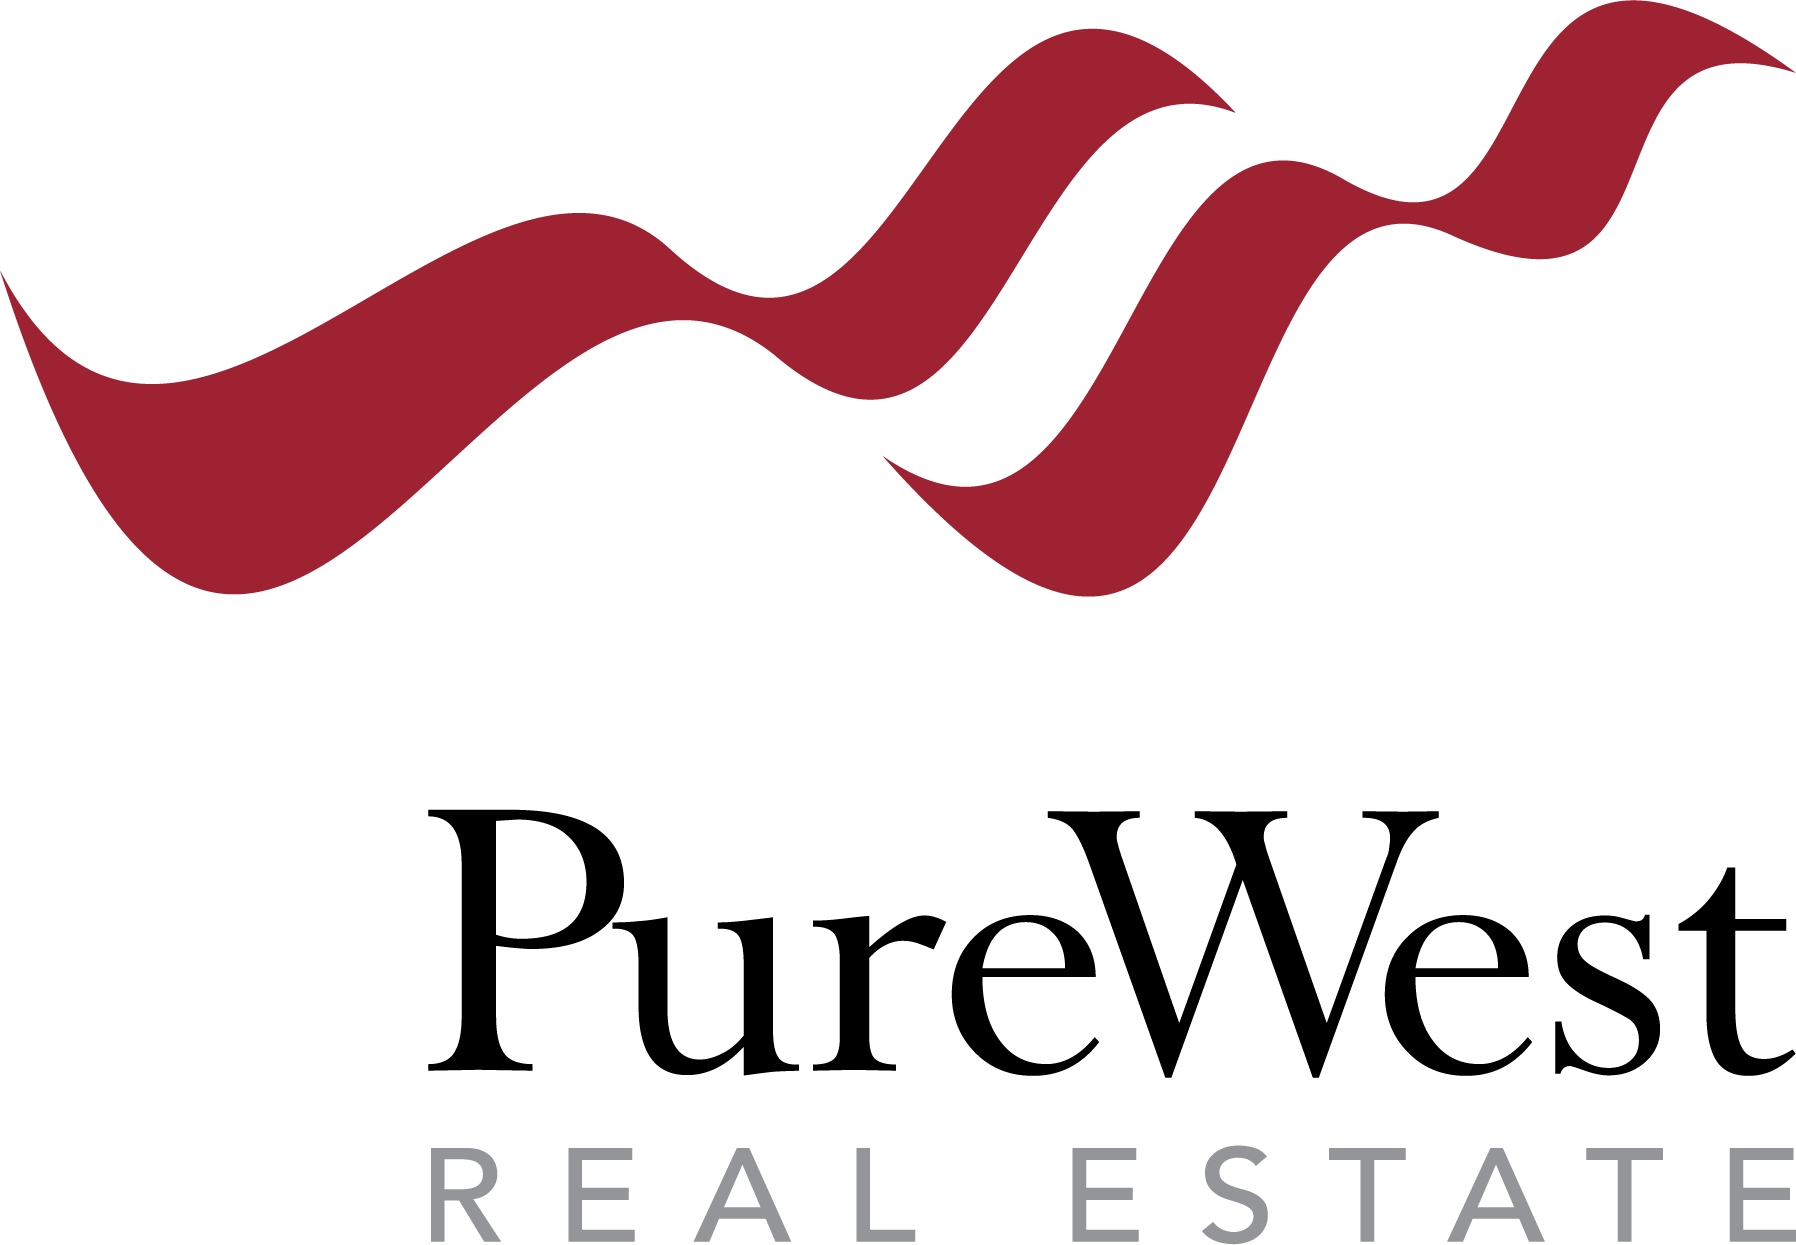 David Stone - Pure West Real Estate Logo